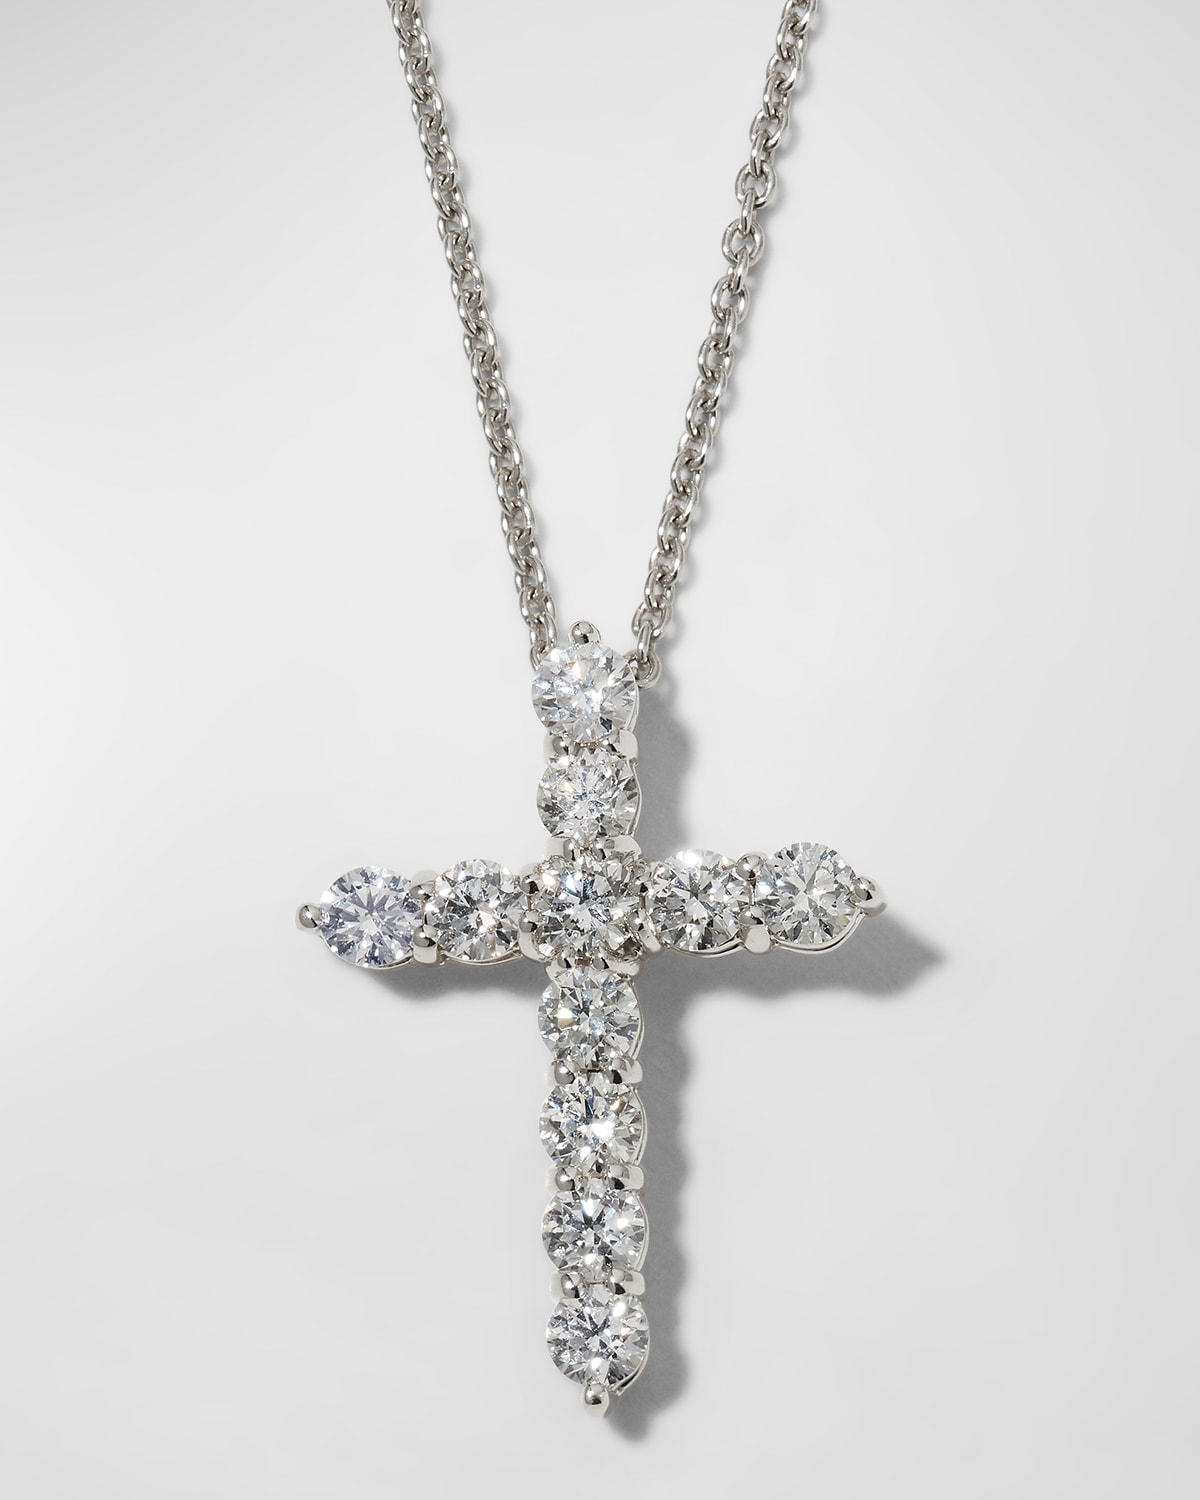 Genuine White & Black Diamond Necklace Diamond Cross Pave Necklace 18 Adjustable Oxidized Sterling Silver Cross Charm Pendant Necklace